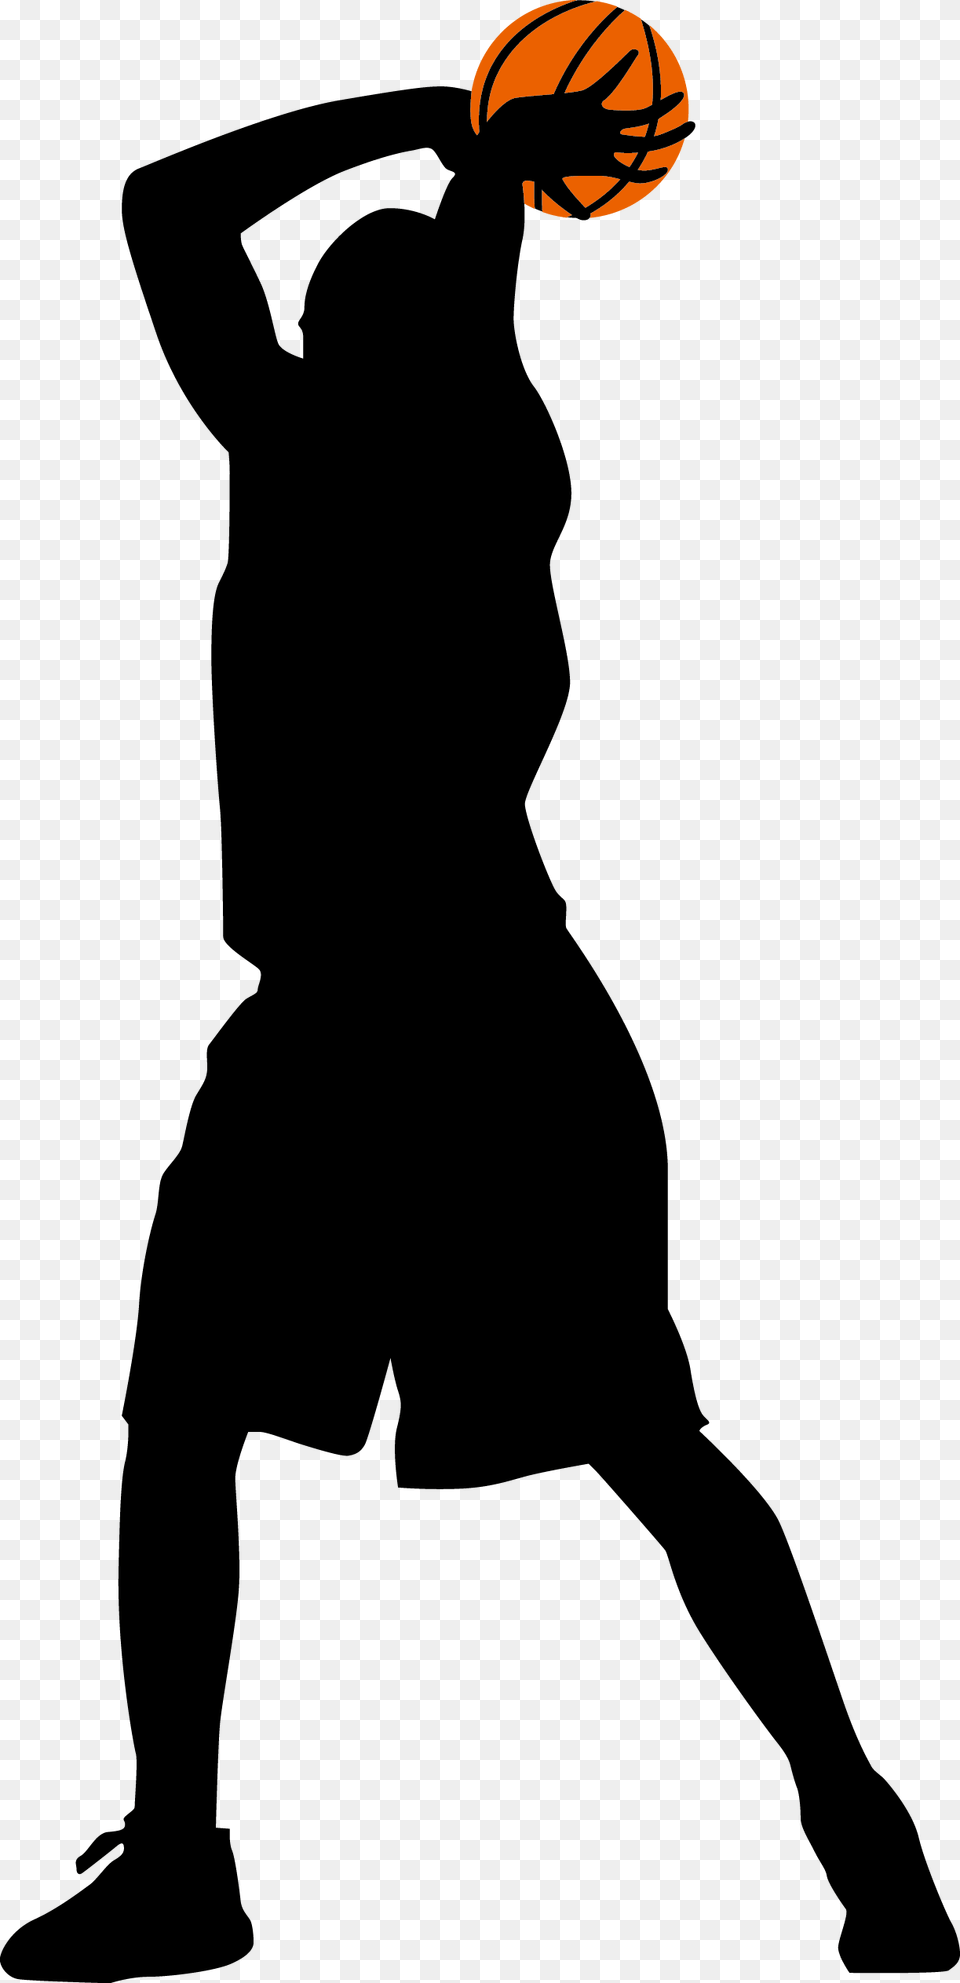 Mlb Baseball Stencil Basketball Illustration Man Shooting Black Silhouette, Adult, Person, Female Free Transparent Png